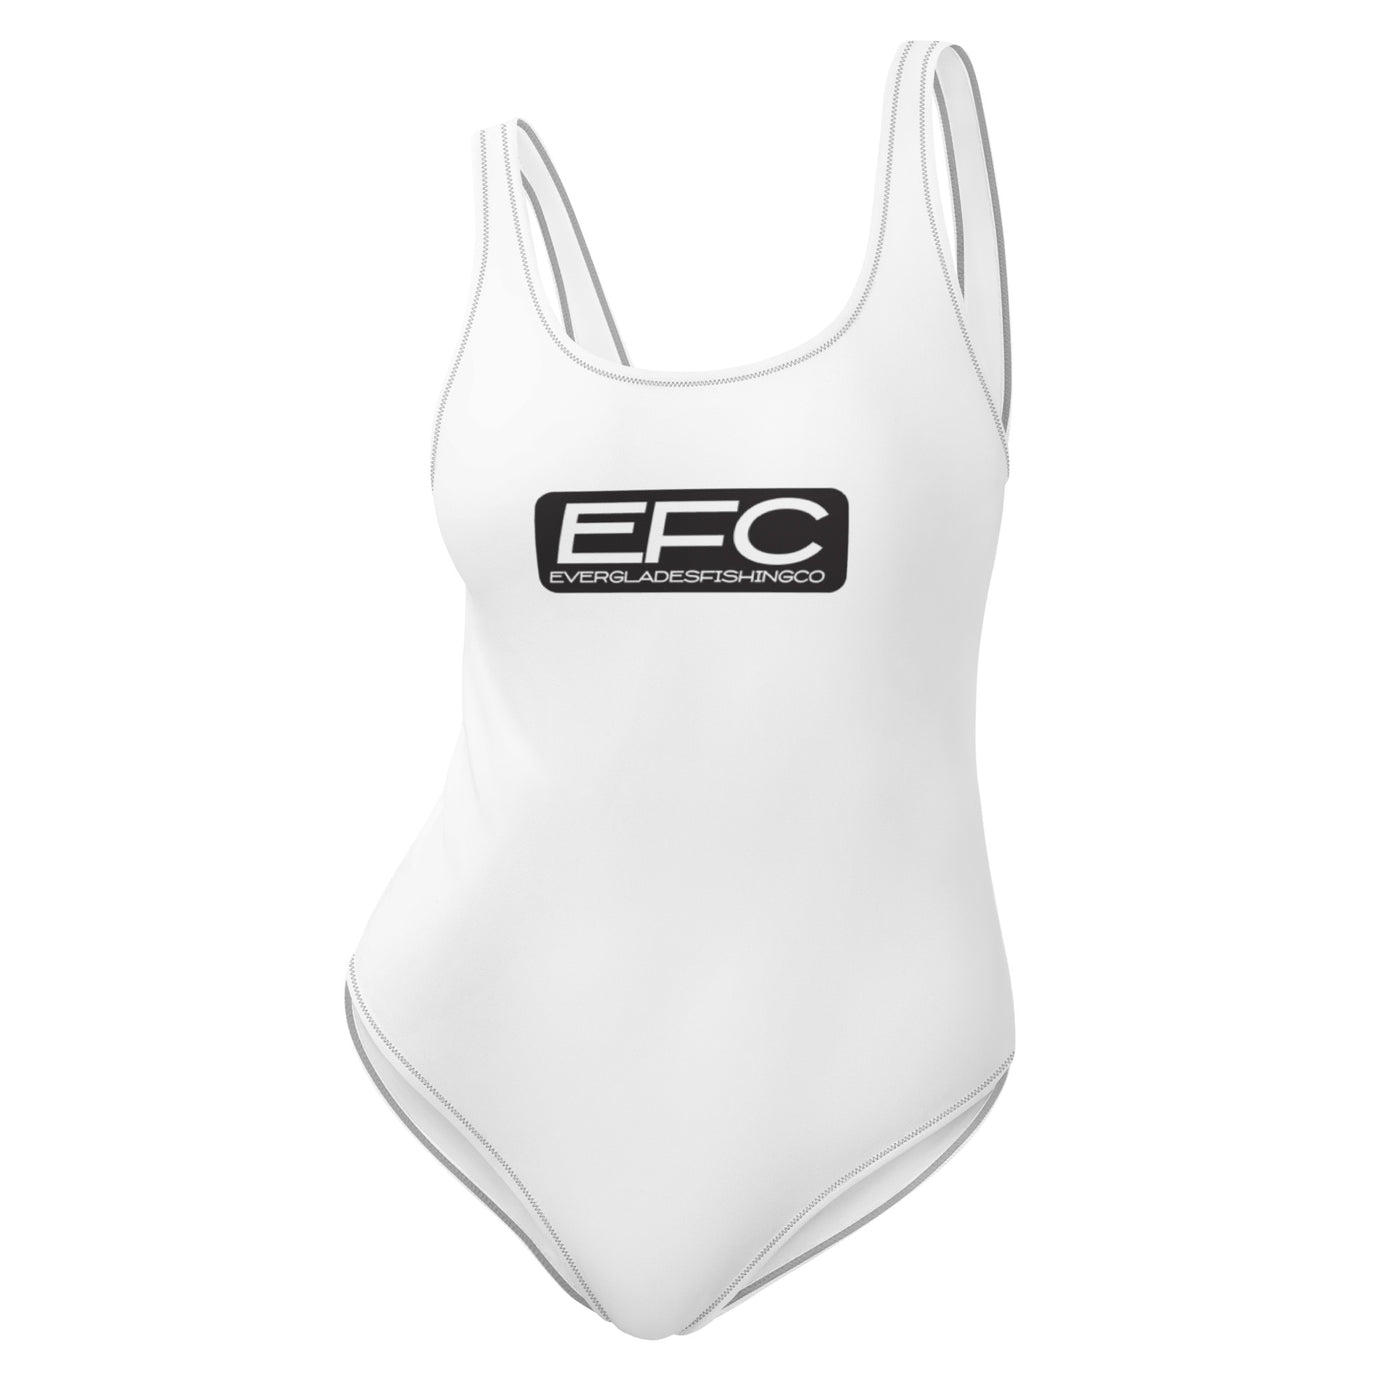 EFC One-Piece Swimsuit